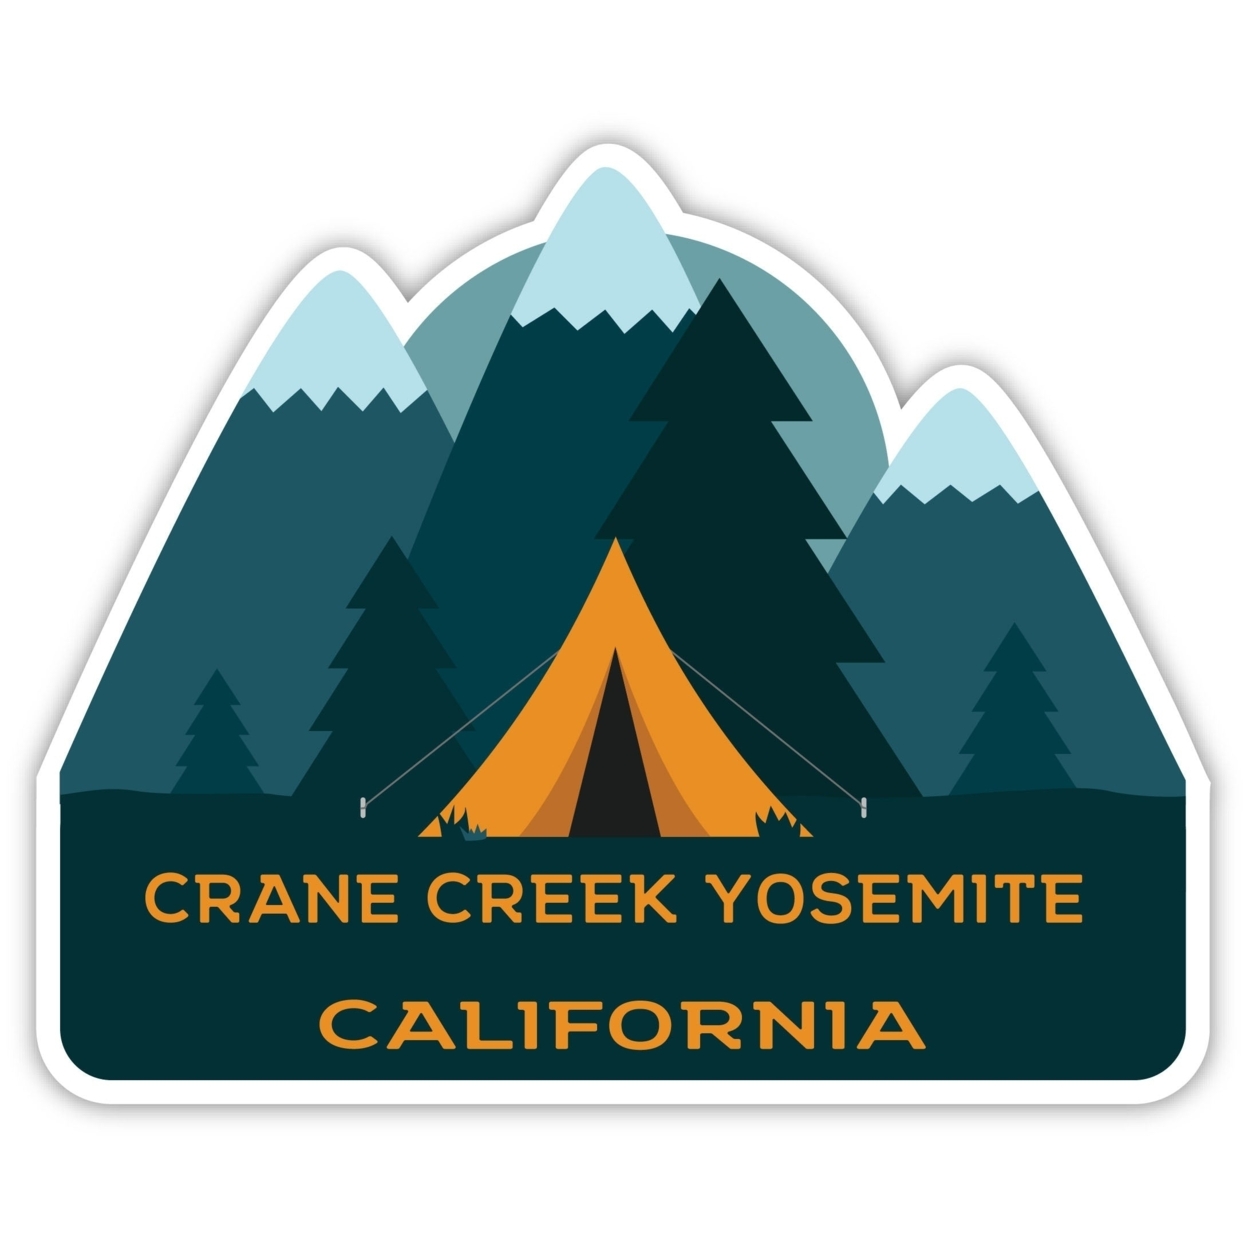 Crane Creek Yosemite California Souvenir Decorative Stickers (Choose Theme And Size) - 4-Pack, 4-Inch, Bear